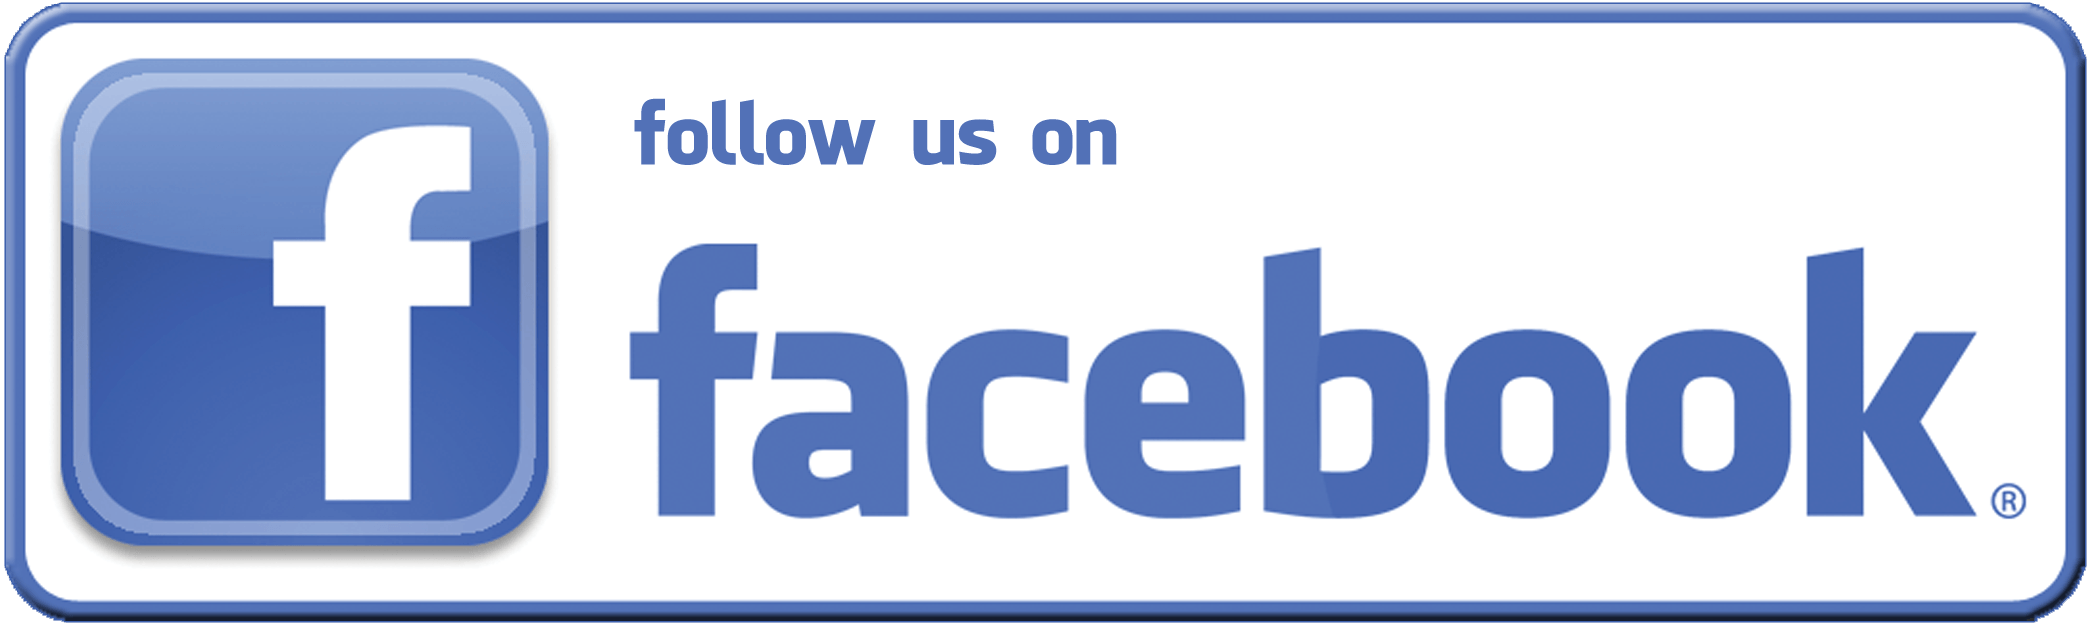 Follow Me On Facebook Logo - Cellular and Molecular Biology